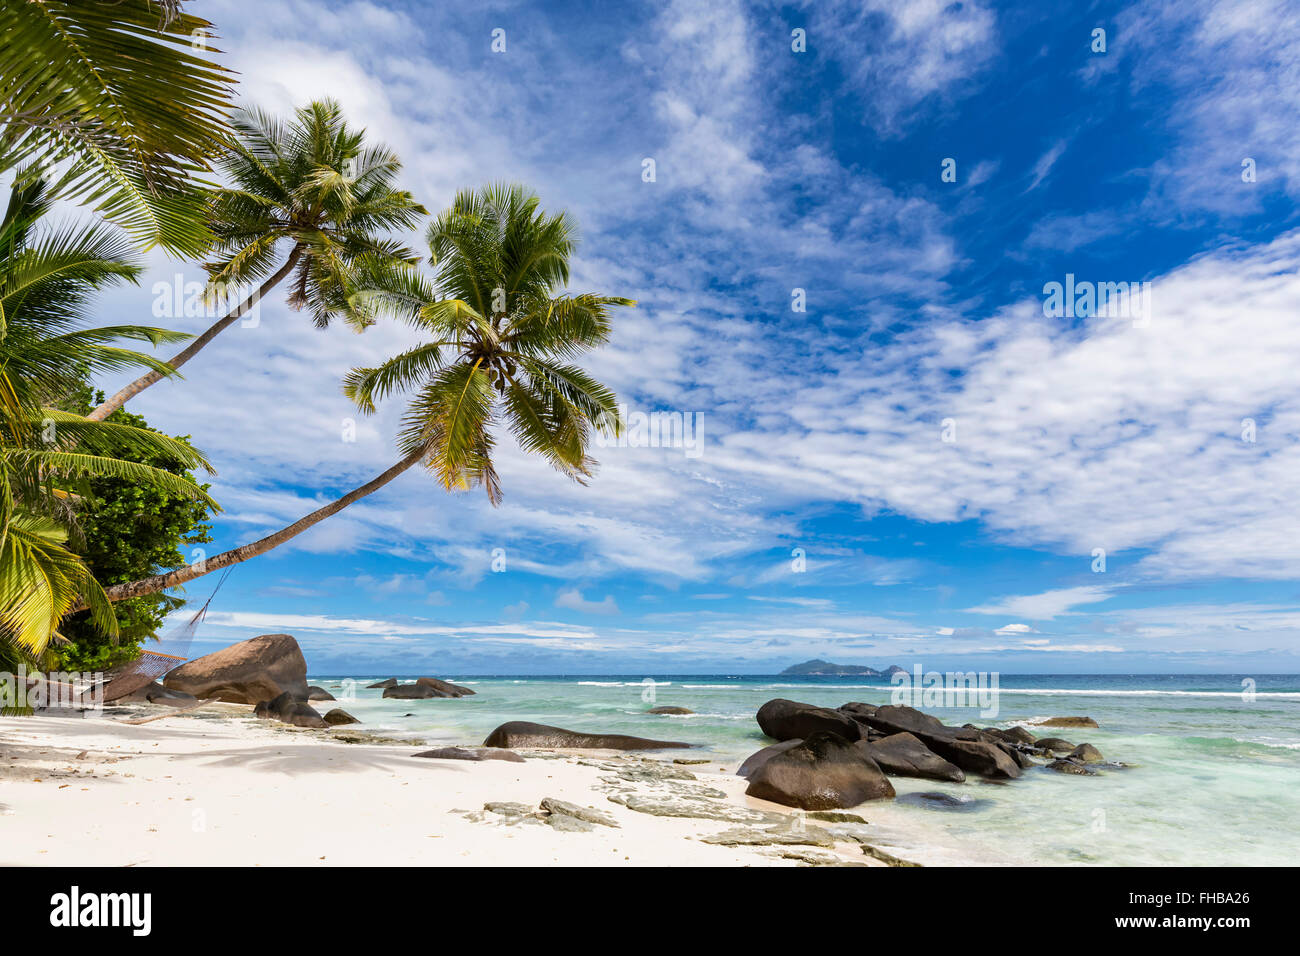 Seychelles, Silhouette Island, Beach La Passe, Presidentel Beach, palm with hammock Stock Photo